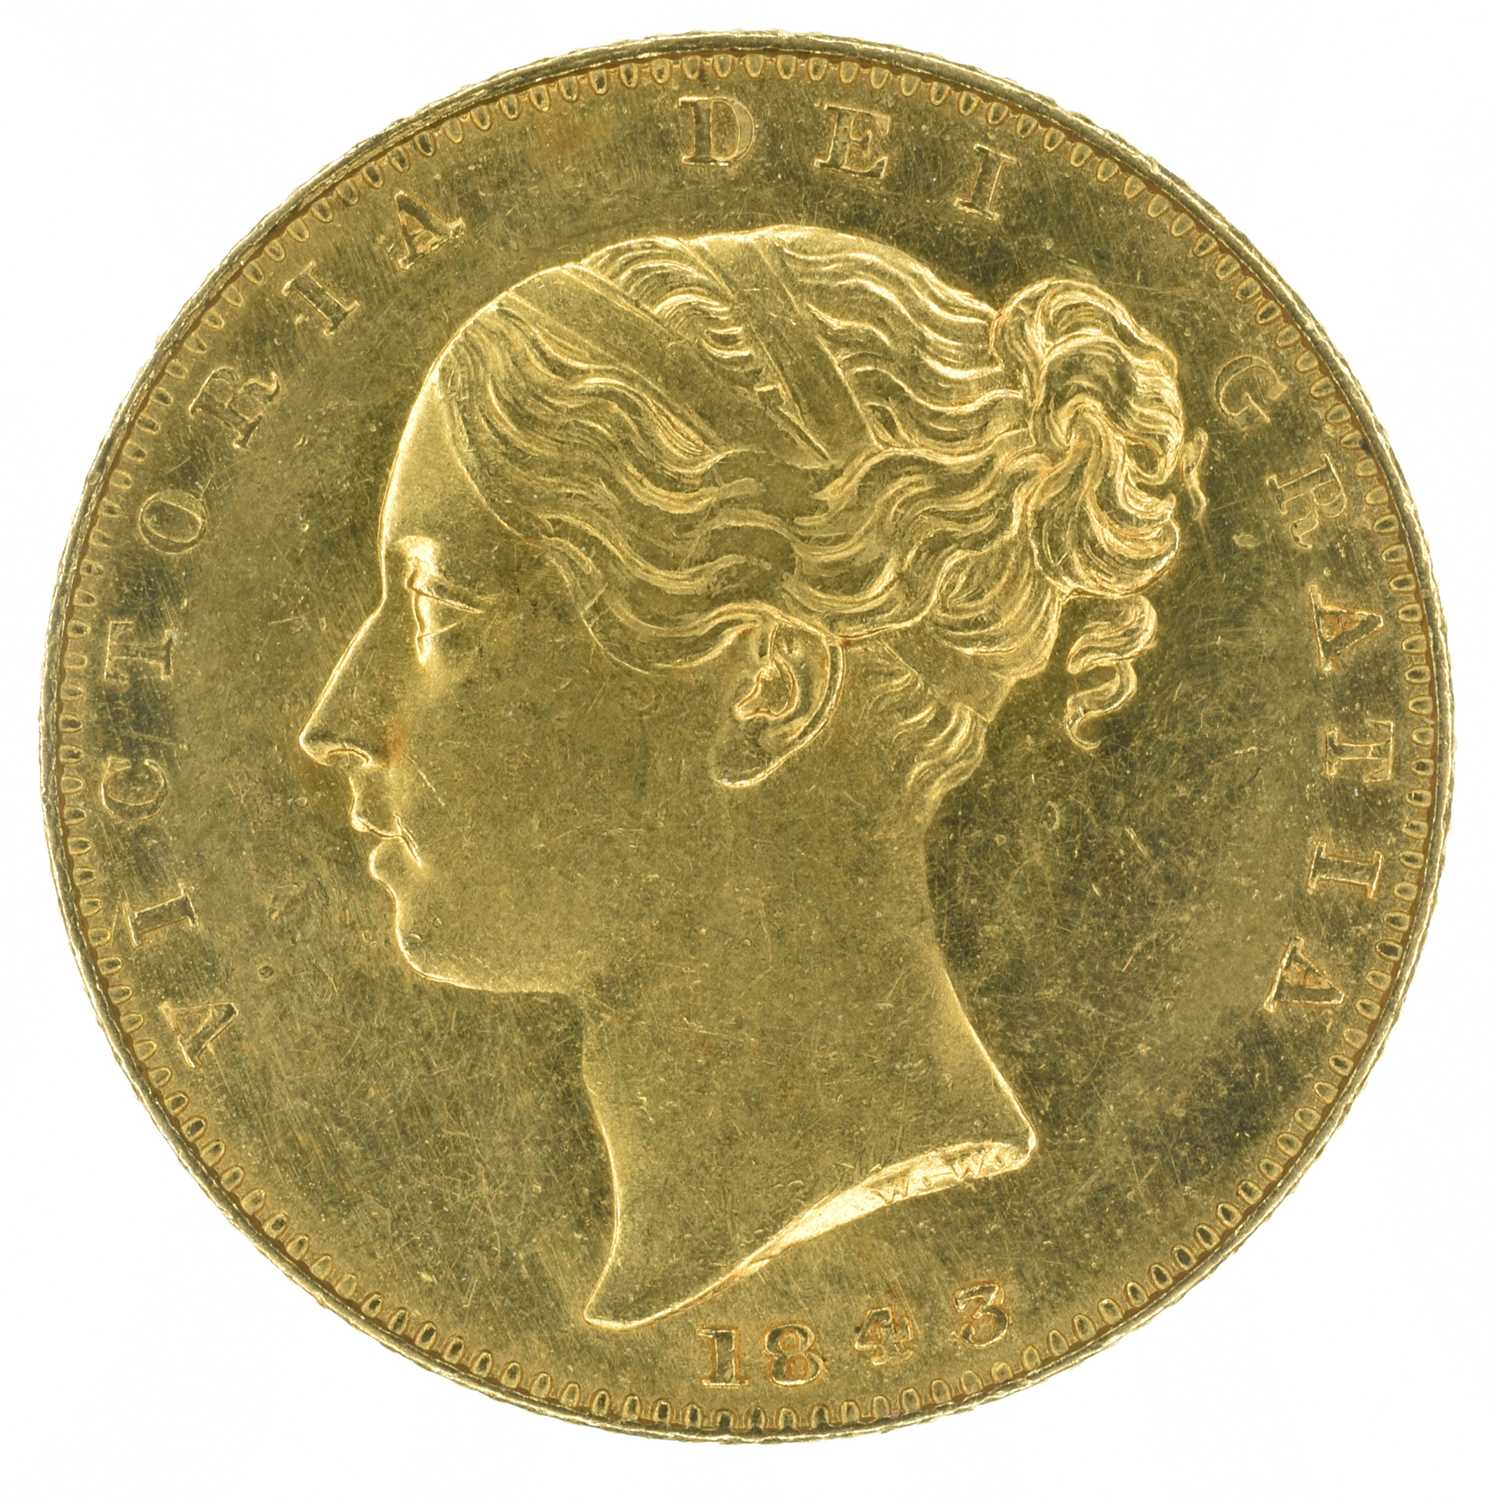 Lot 10 - Queen Victoria, Sovereign, 1843/2, EF.